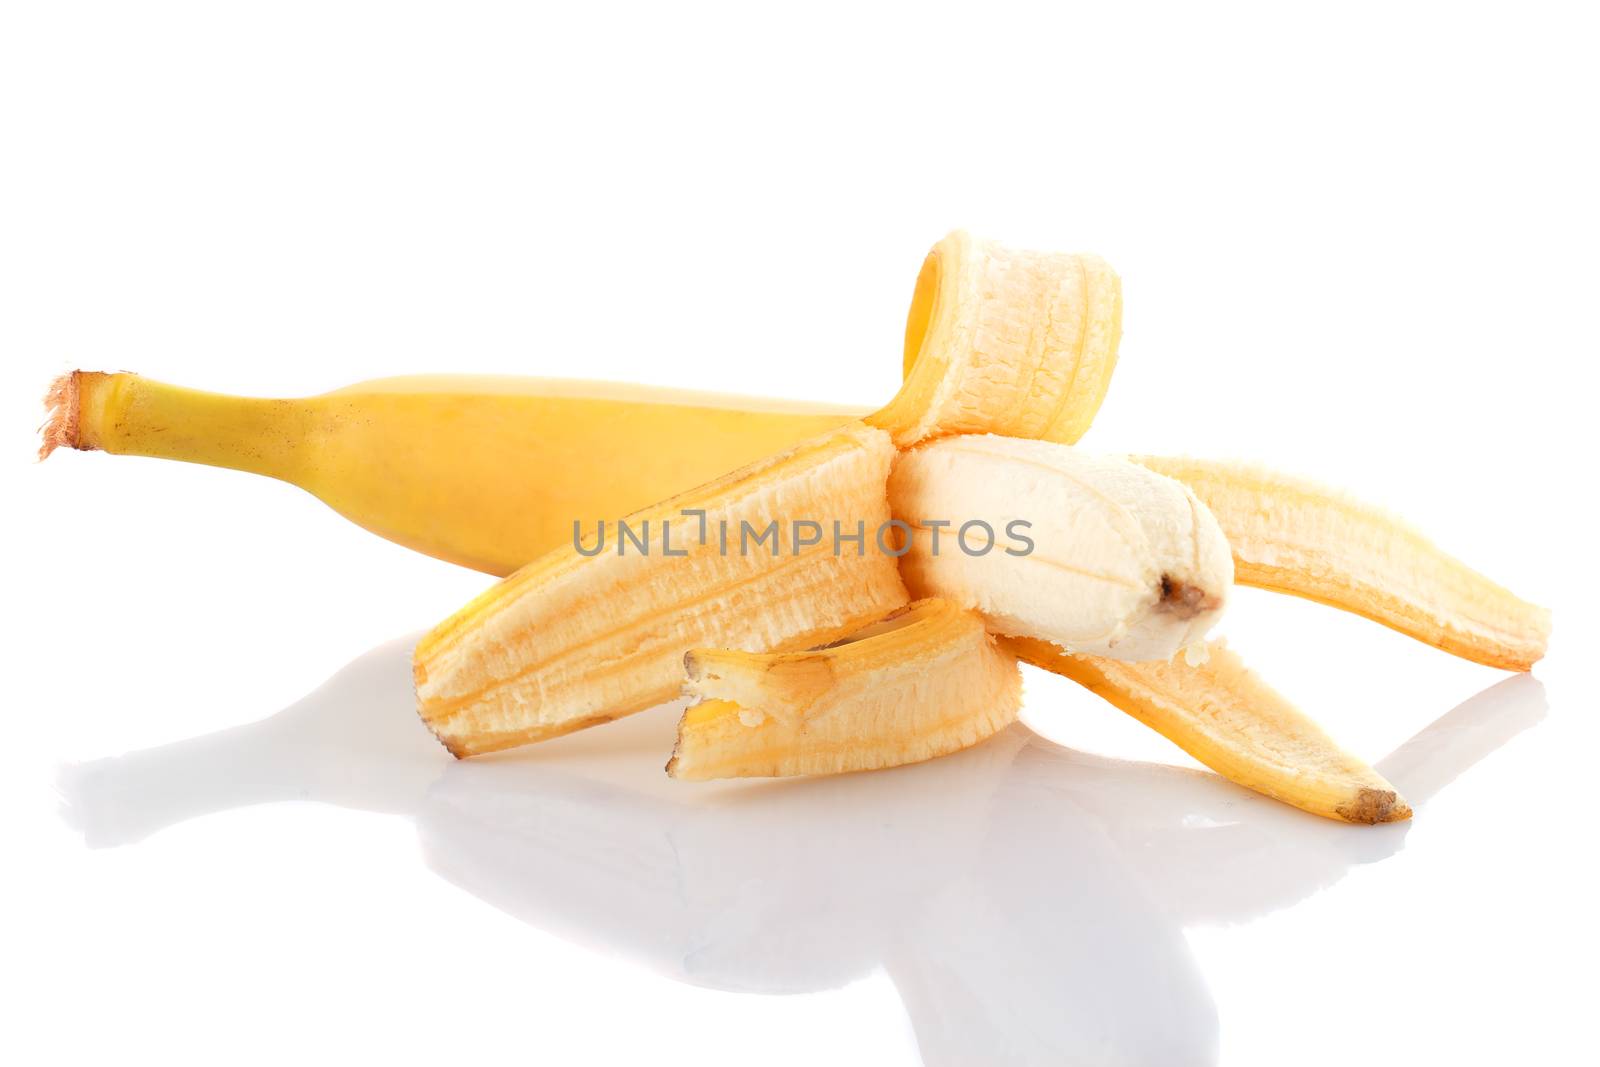 Half peeled ripe banana by baronvsp